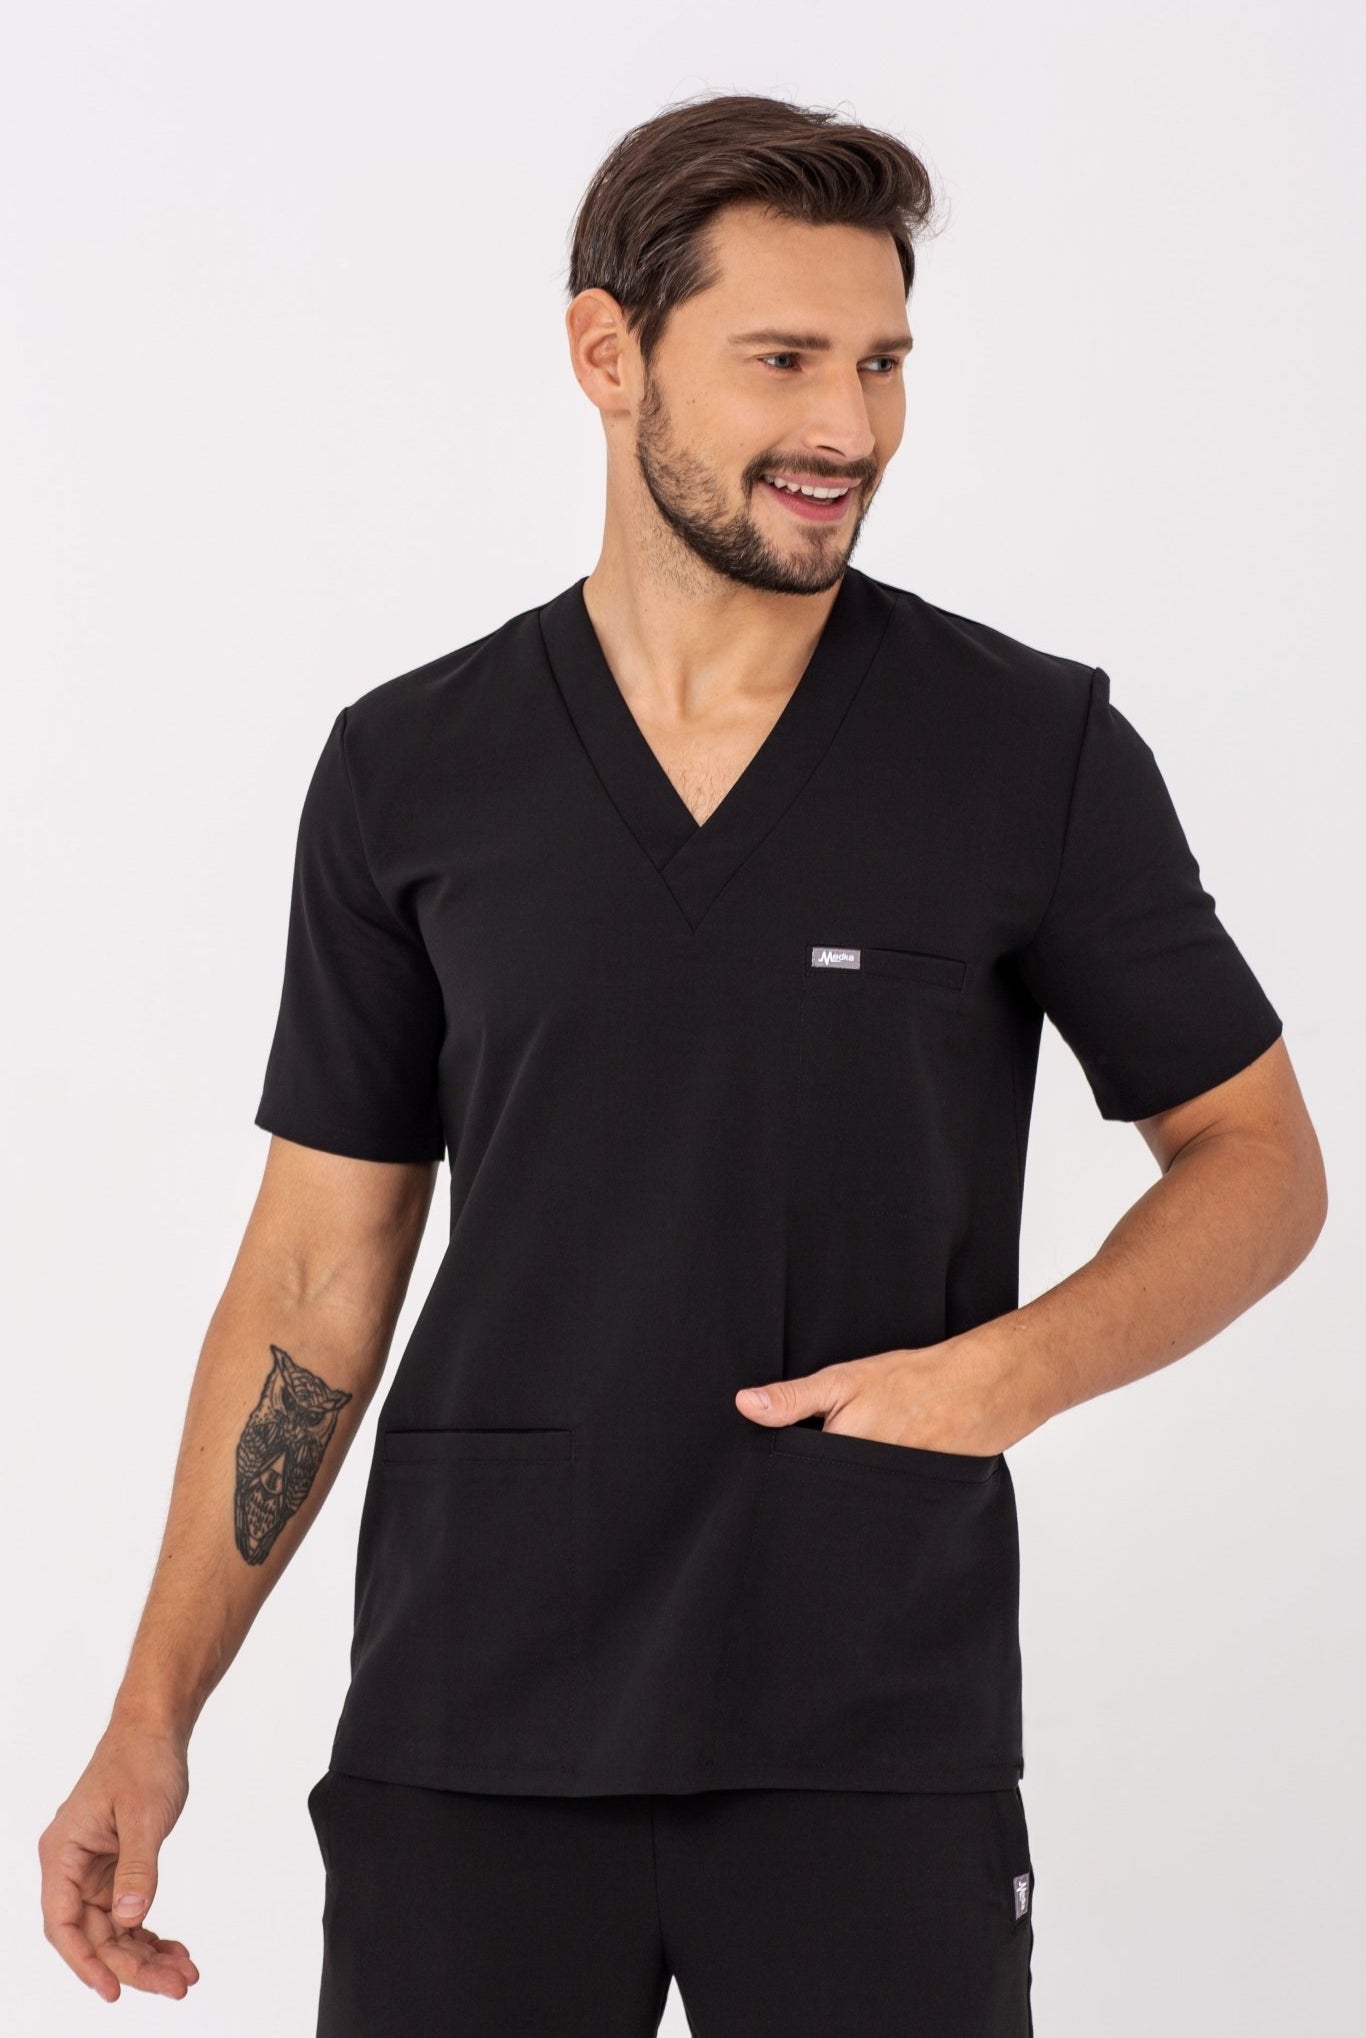 Bluza medyczna męska PACE - kolor czarny